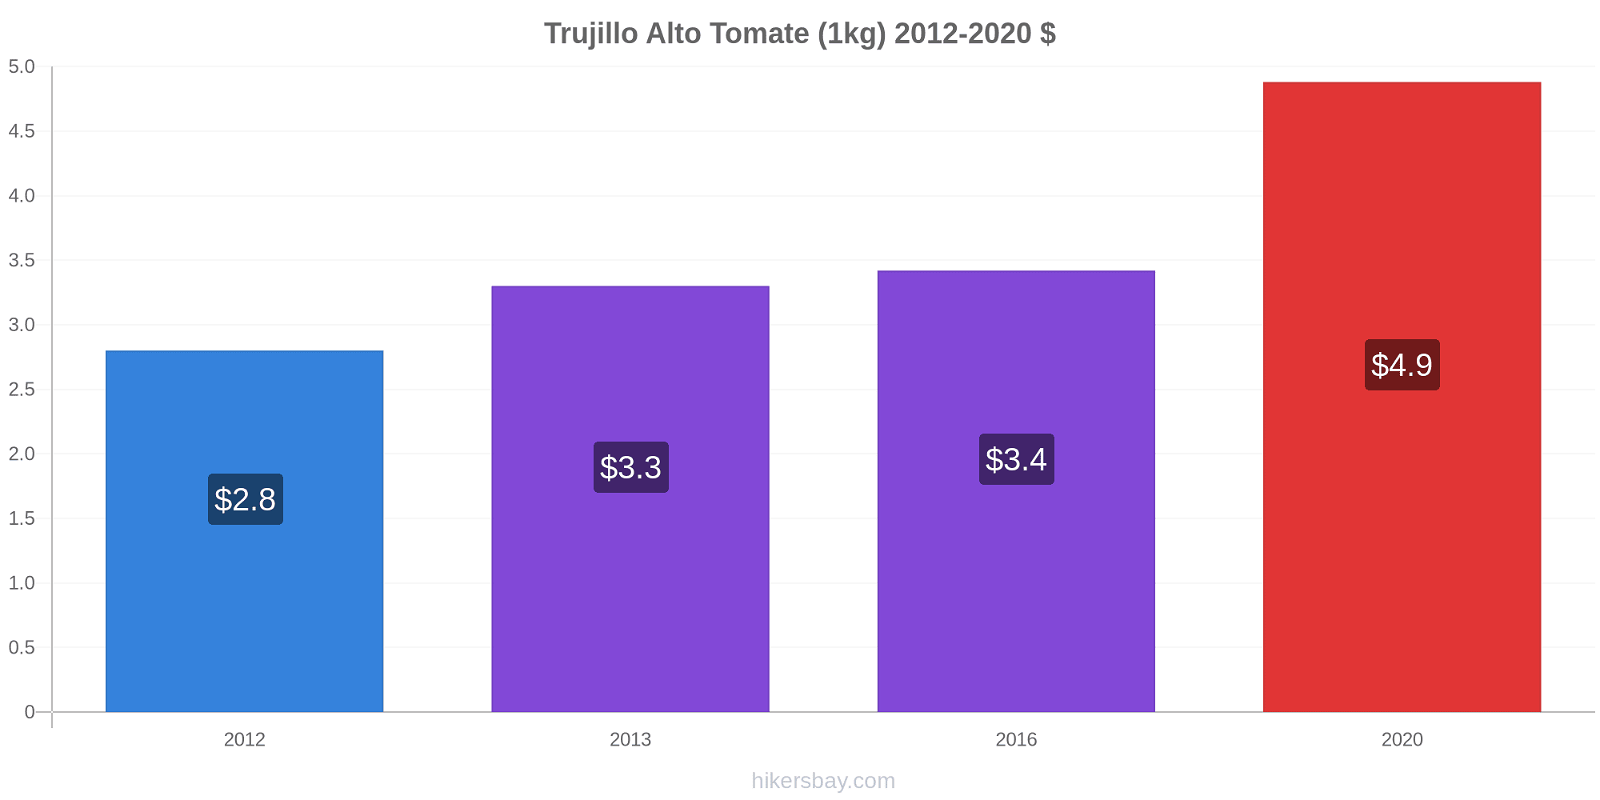 Trujillo Alto modificări de preț Tomate (1kg) hikersbay.com